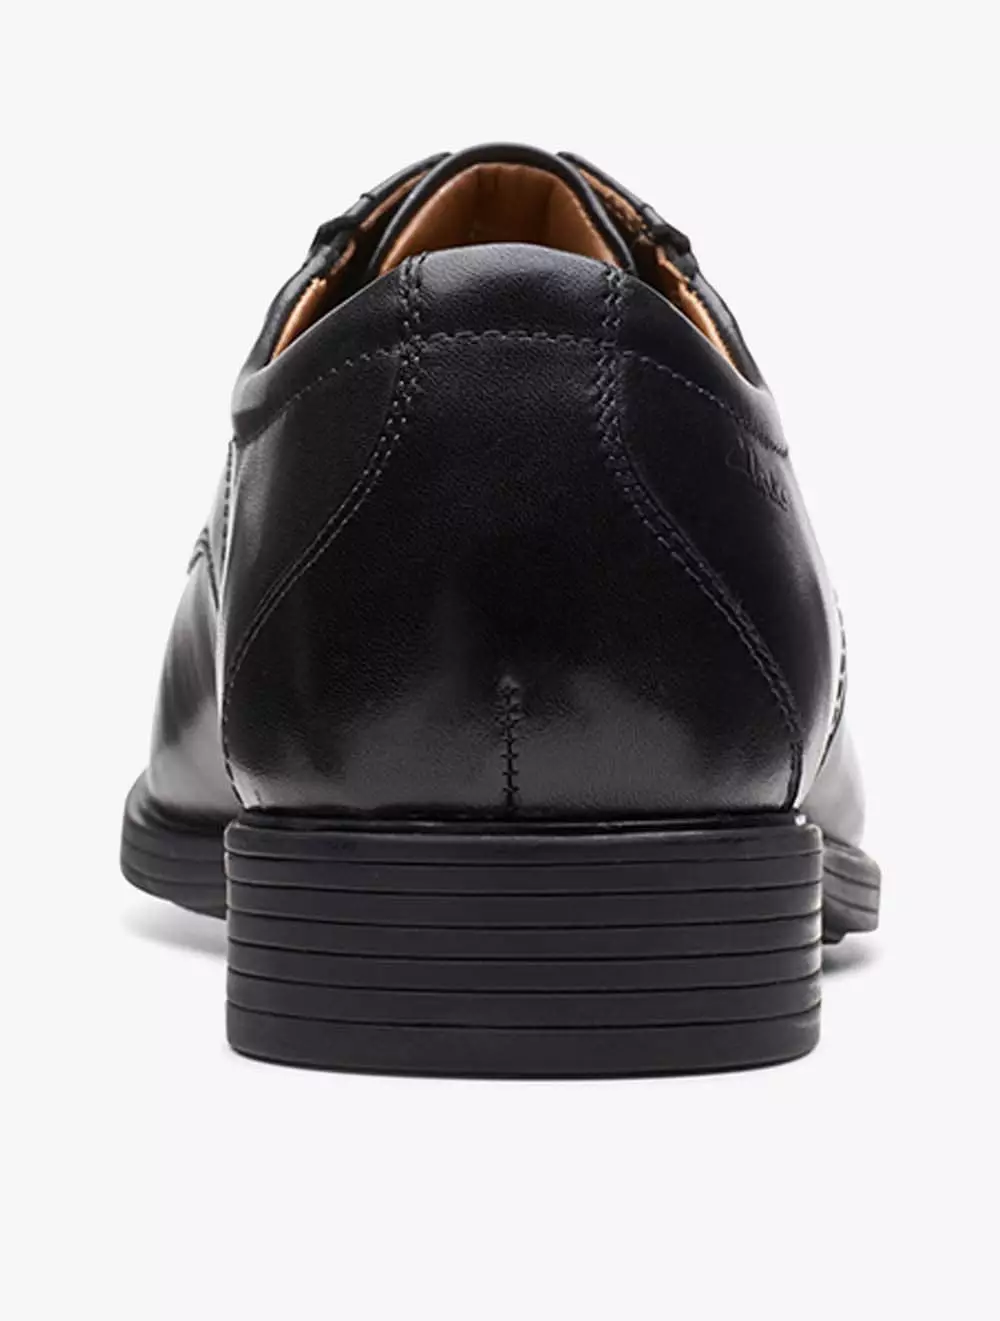 Jual Clarks Clarks Whiddon Pace Men's Shoes- Black Leather Original ...